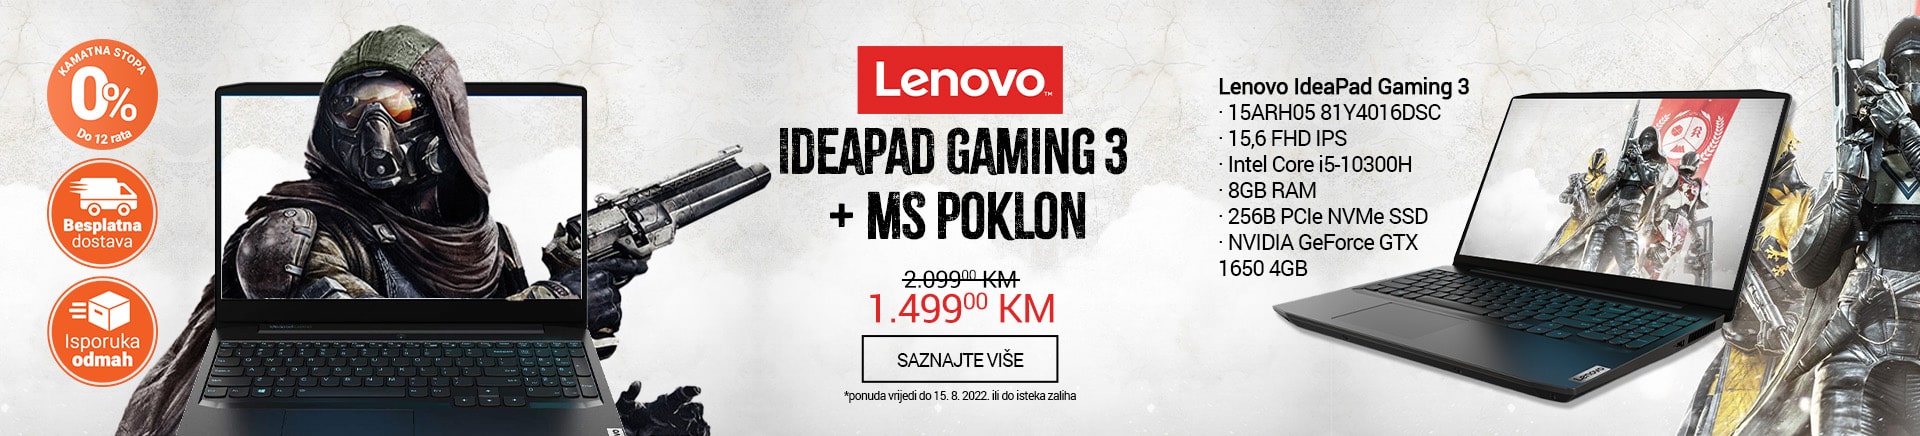 BA~Laptop Lenovo IdeaPad Gaming 3 + MS poklon MOBILE 380 X 436-min.jpg